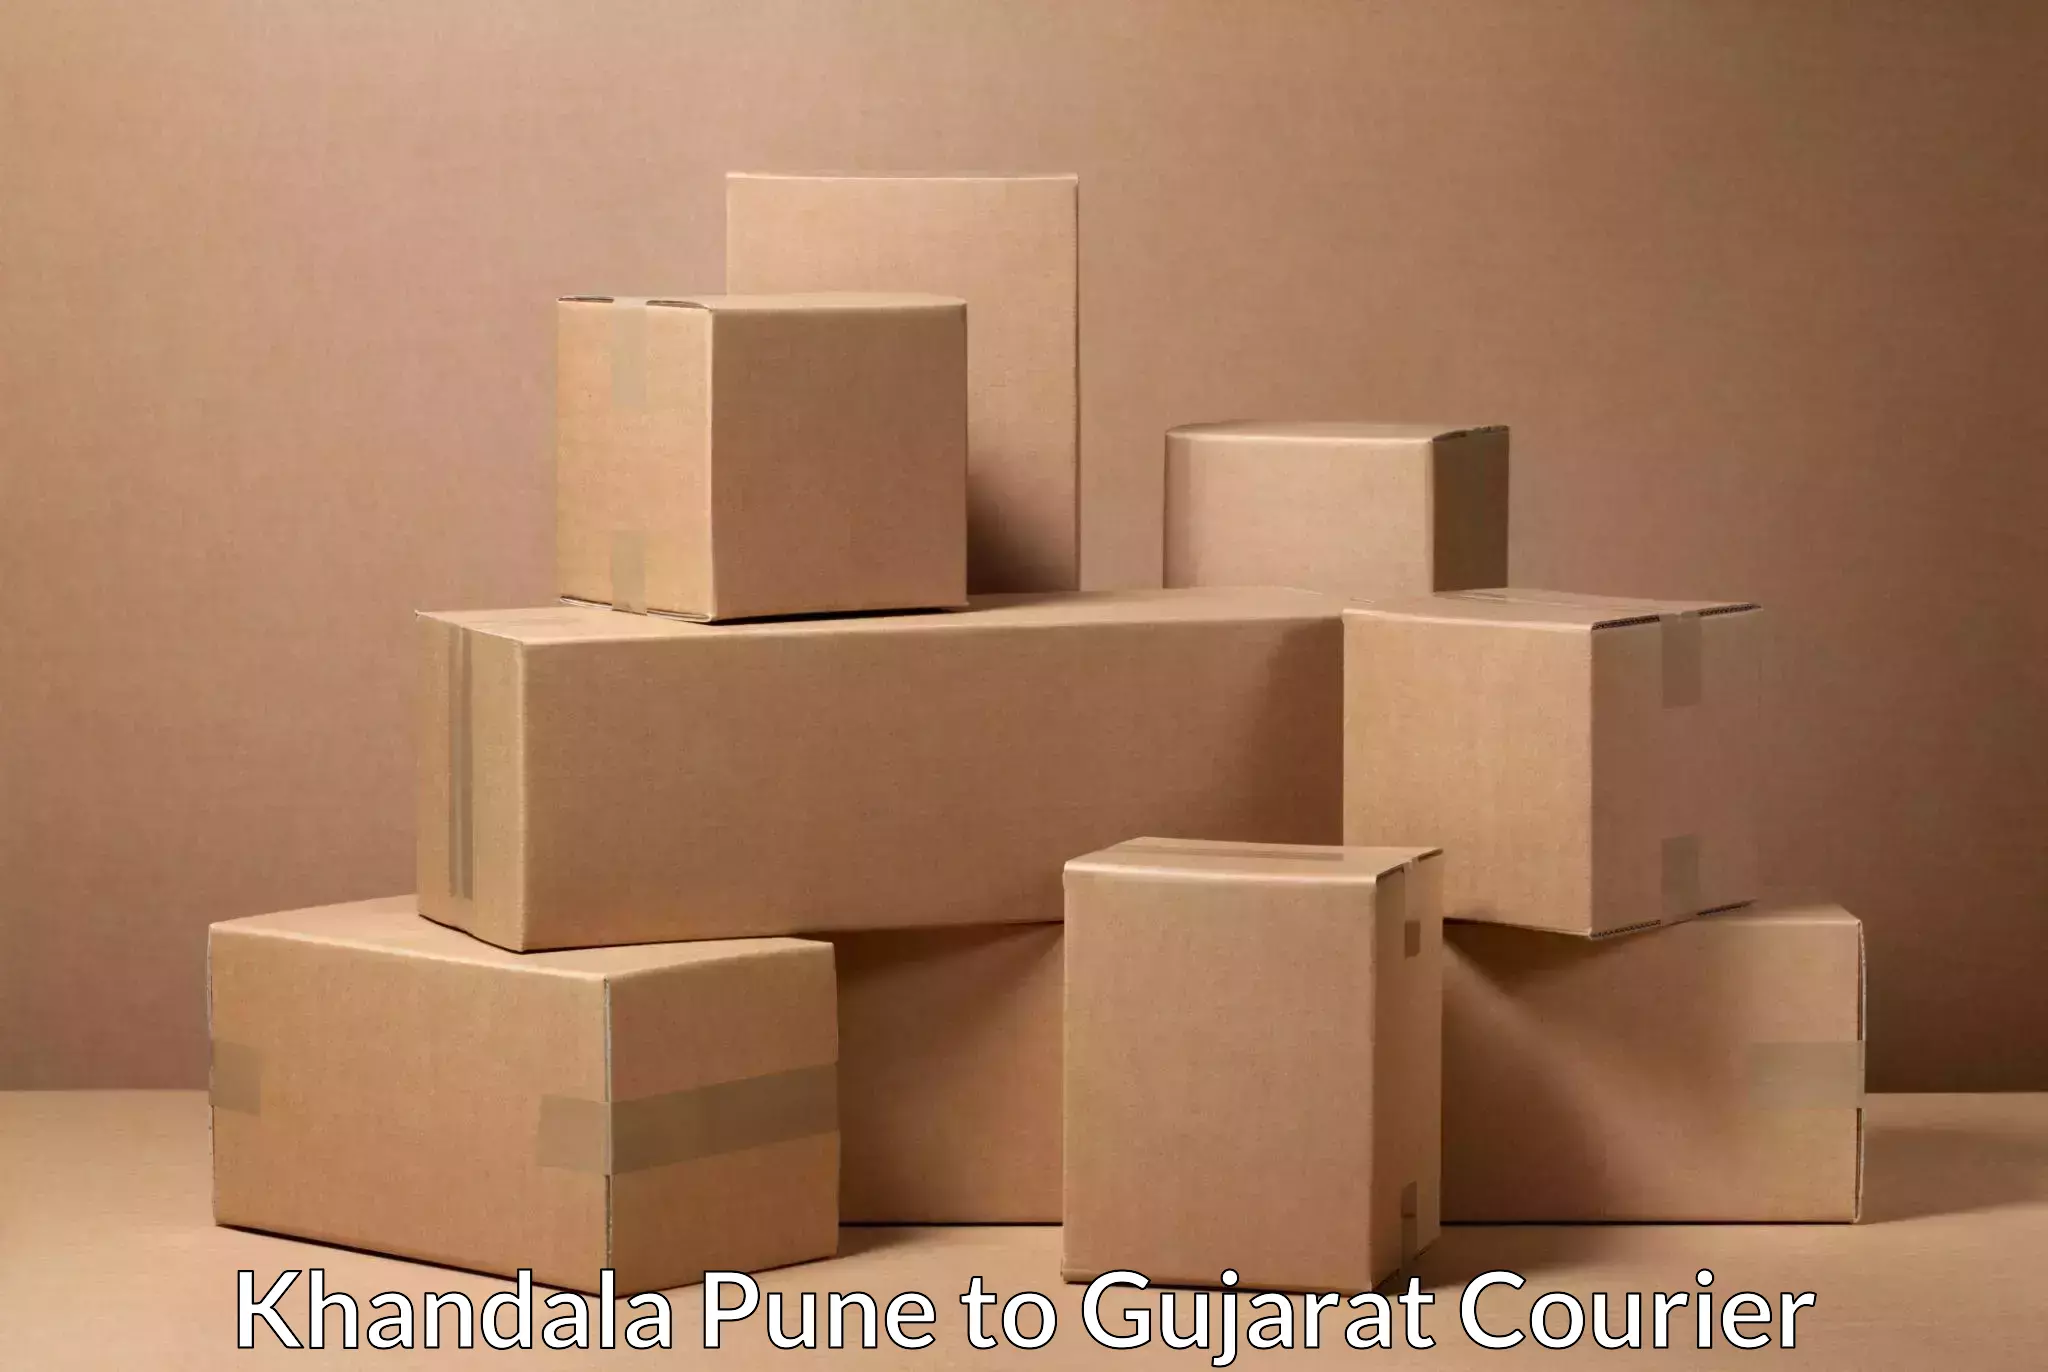 Tech-enabled shipping Khandala Pune to Dwarka